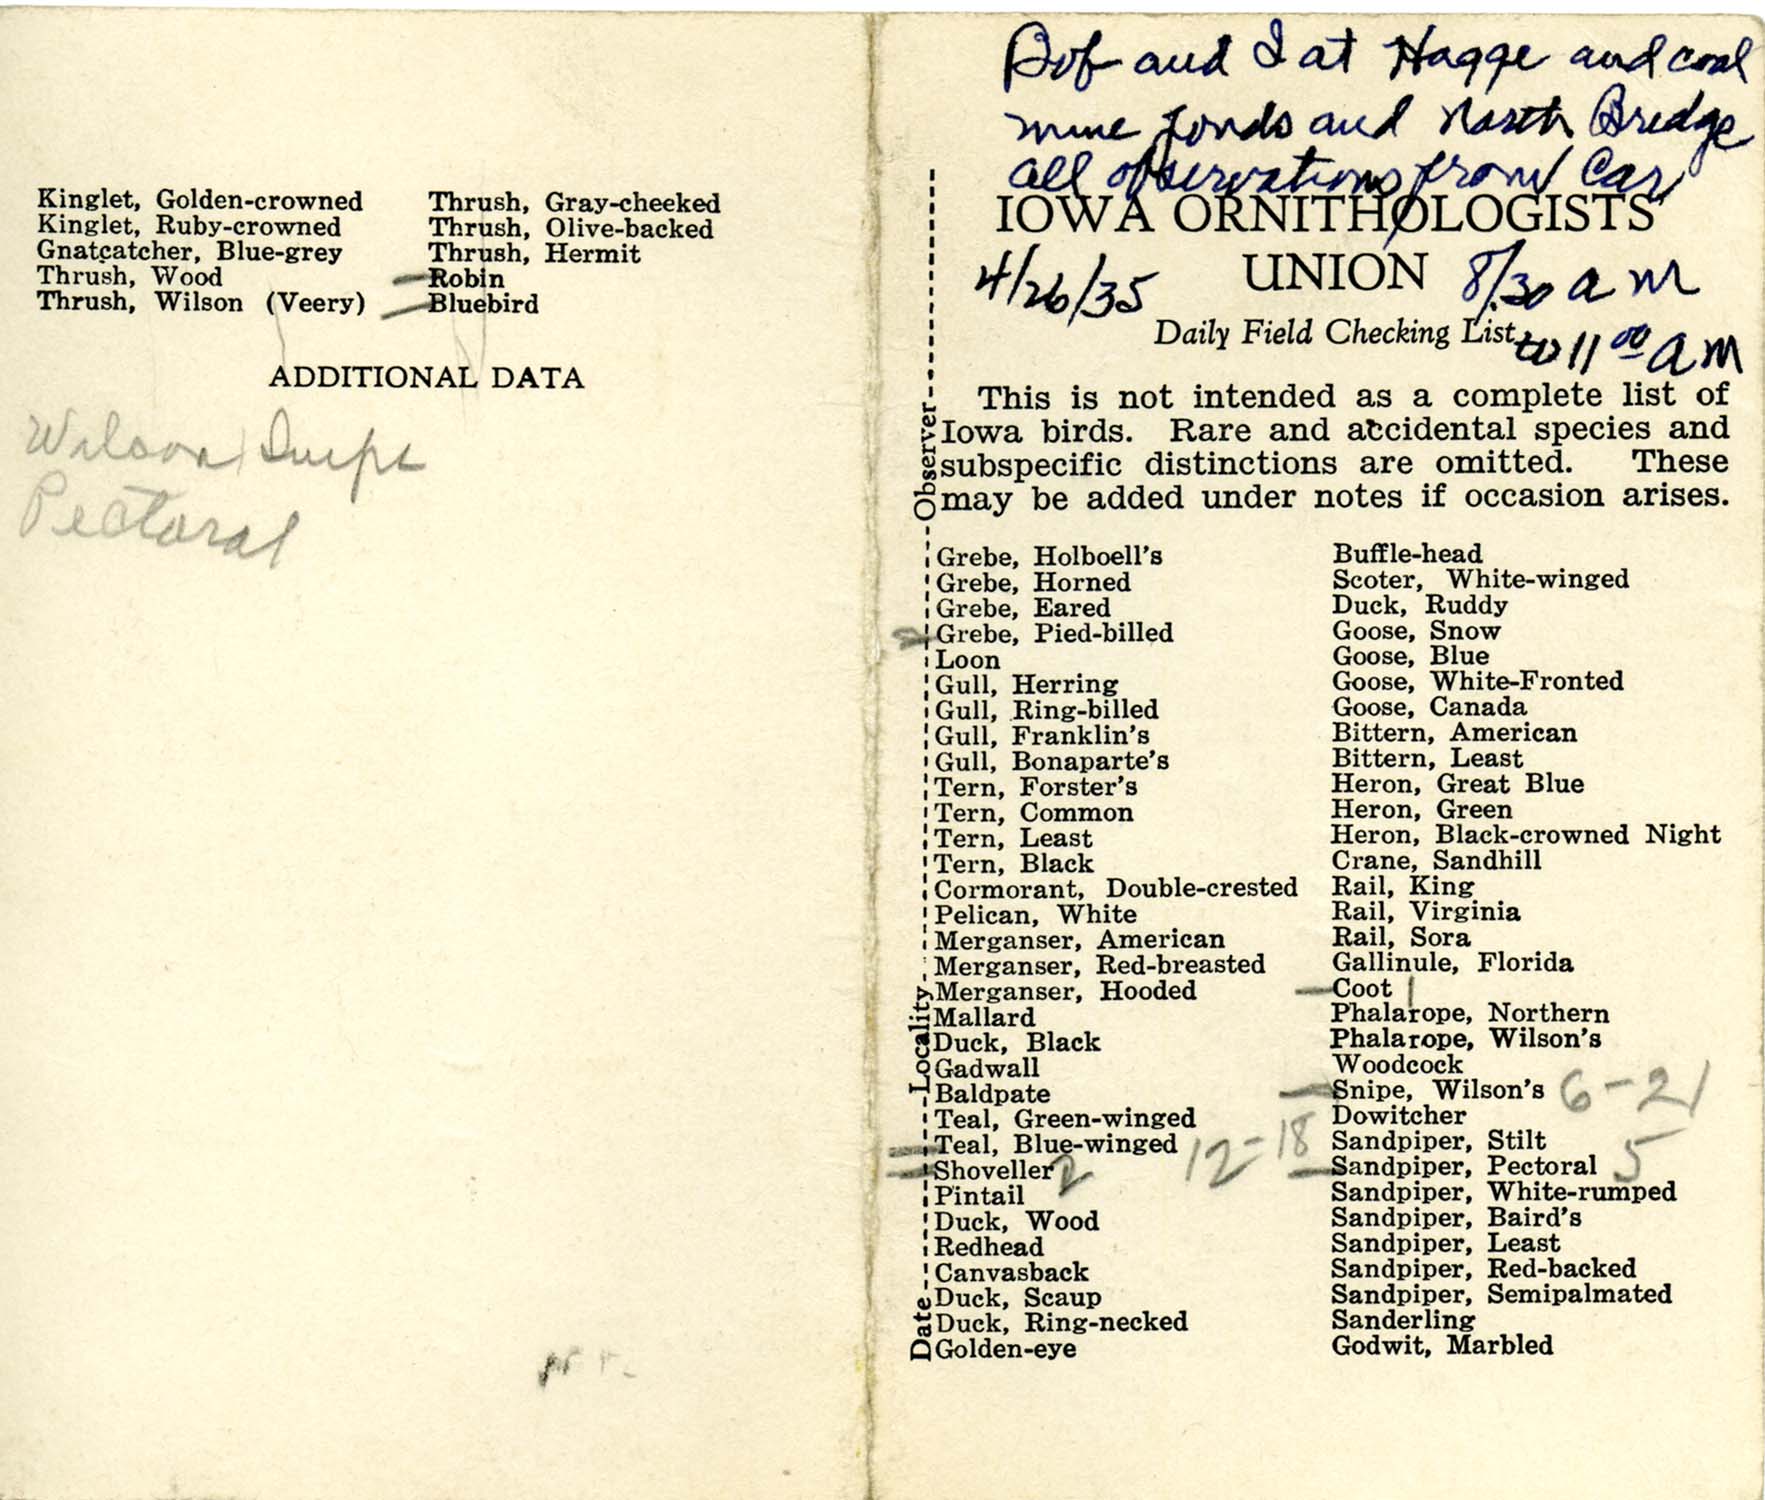 Daily field checking list, Walter Rosene, April 26, 1935